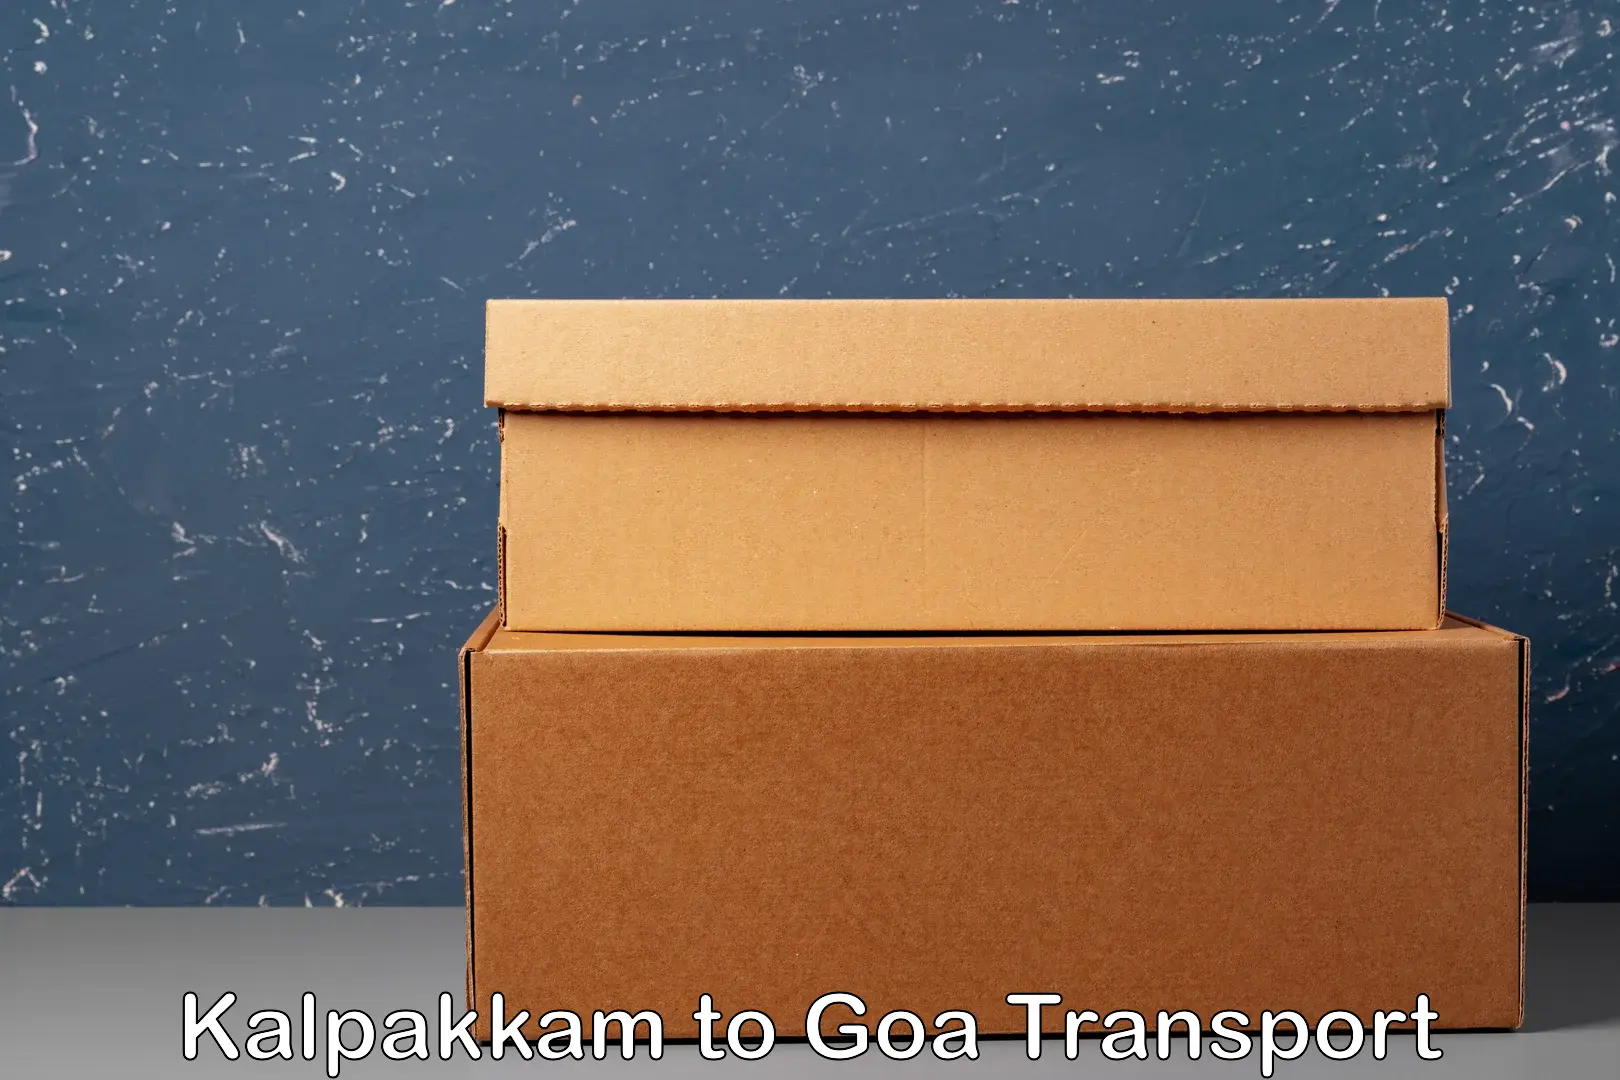 Truck transport companies in India Kalpakkam to Goa